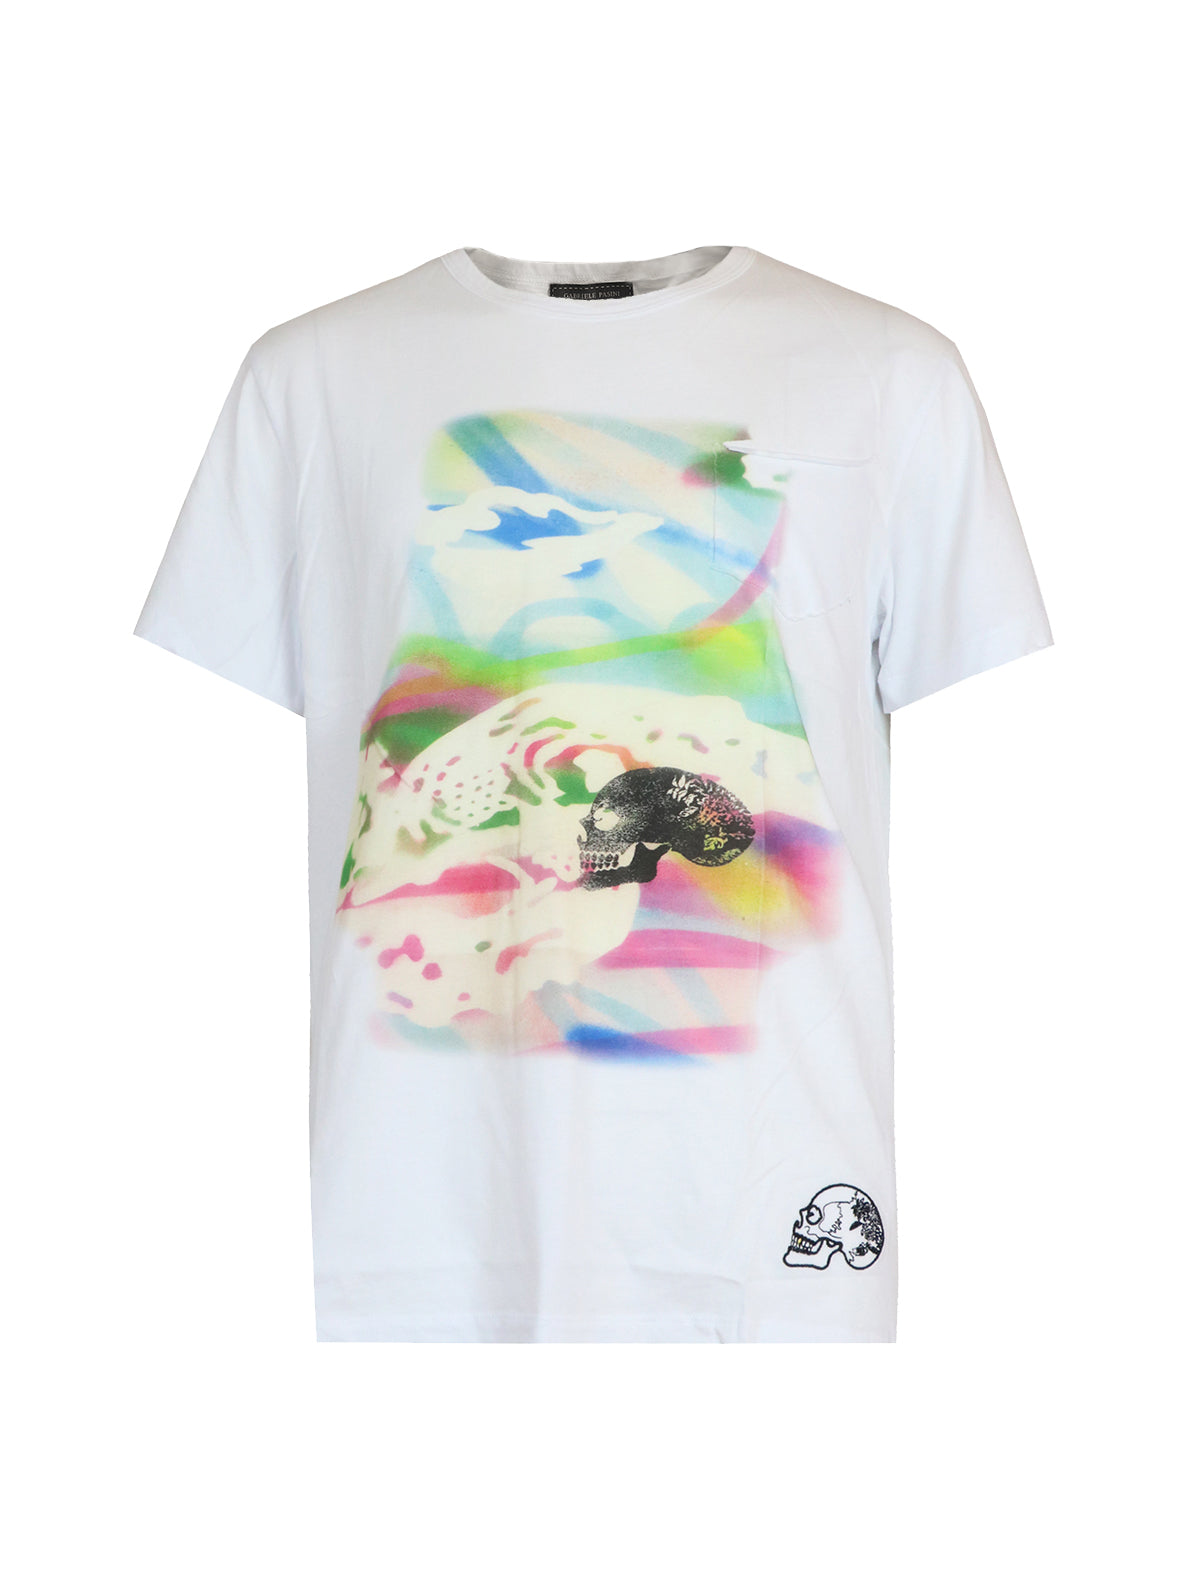 Gabriele Pasini Graphic T-Shirt in White/Multi